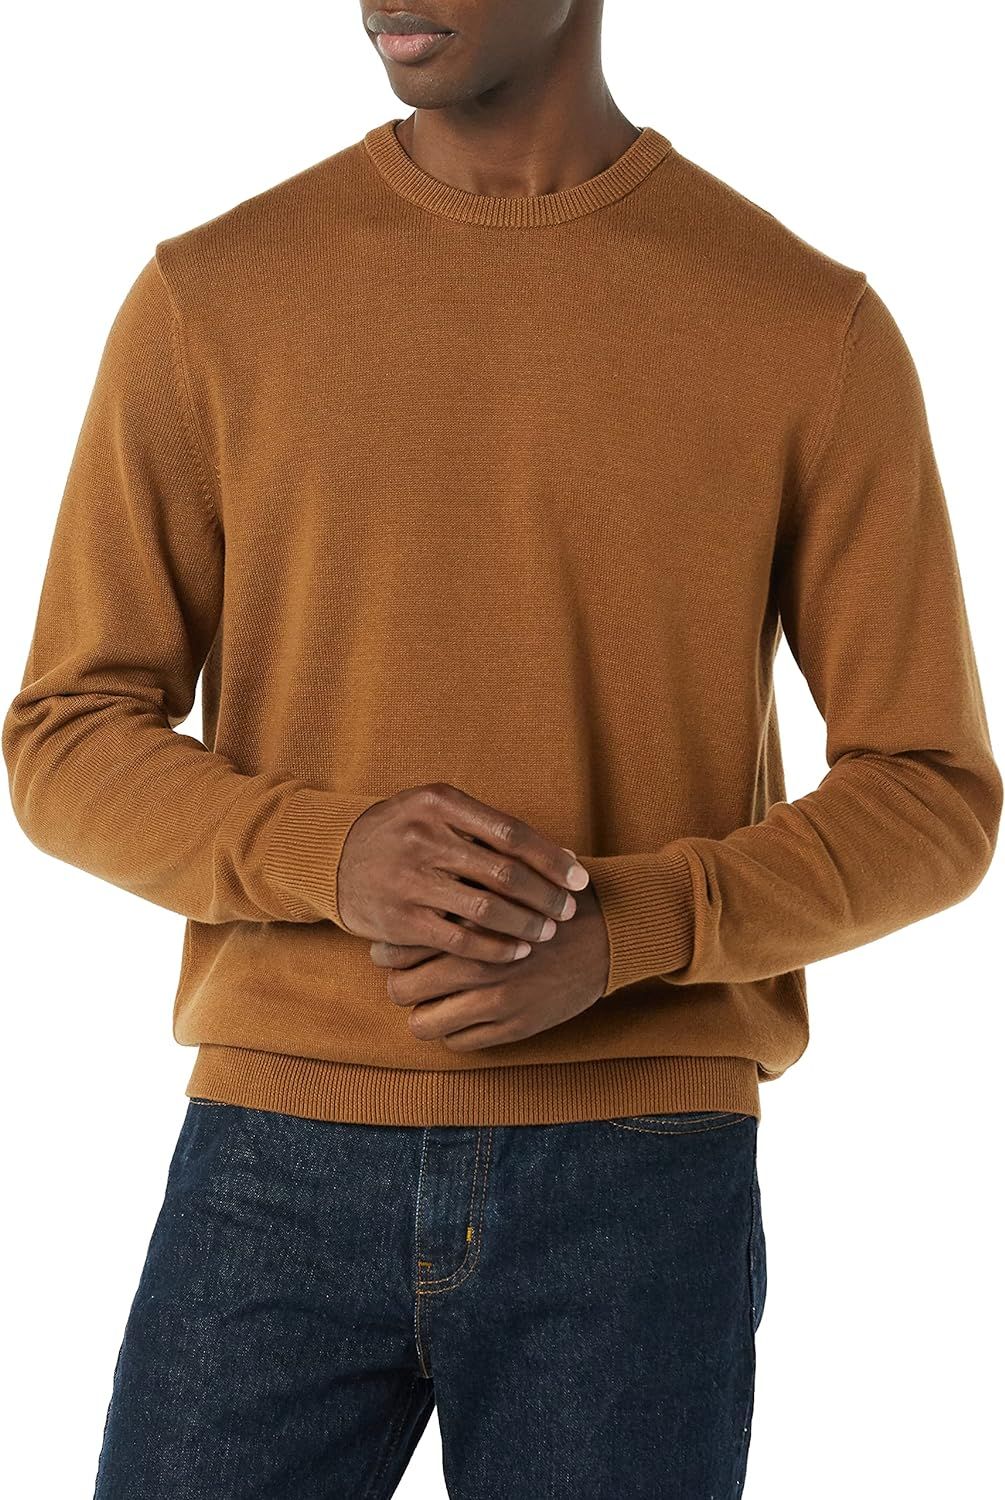 Amazon Essentials Men's Crewneck Sweater | Amazon (US)